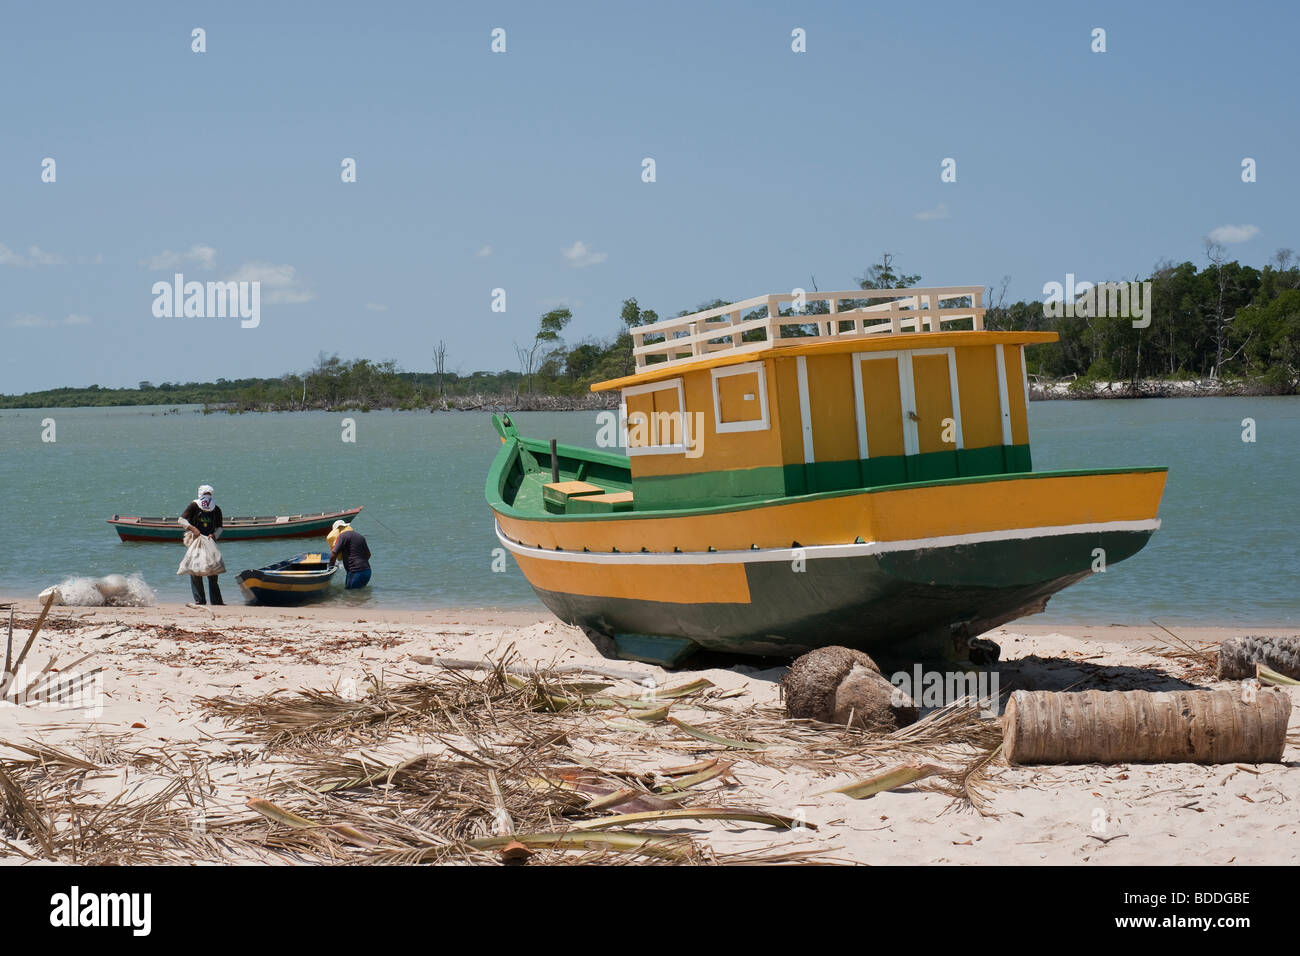 Boat and fishermen on a beach in Parnaiba, Brazil Stock Photo